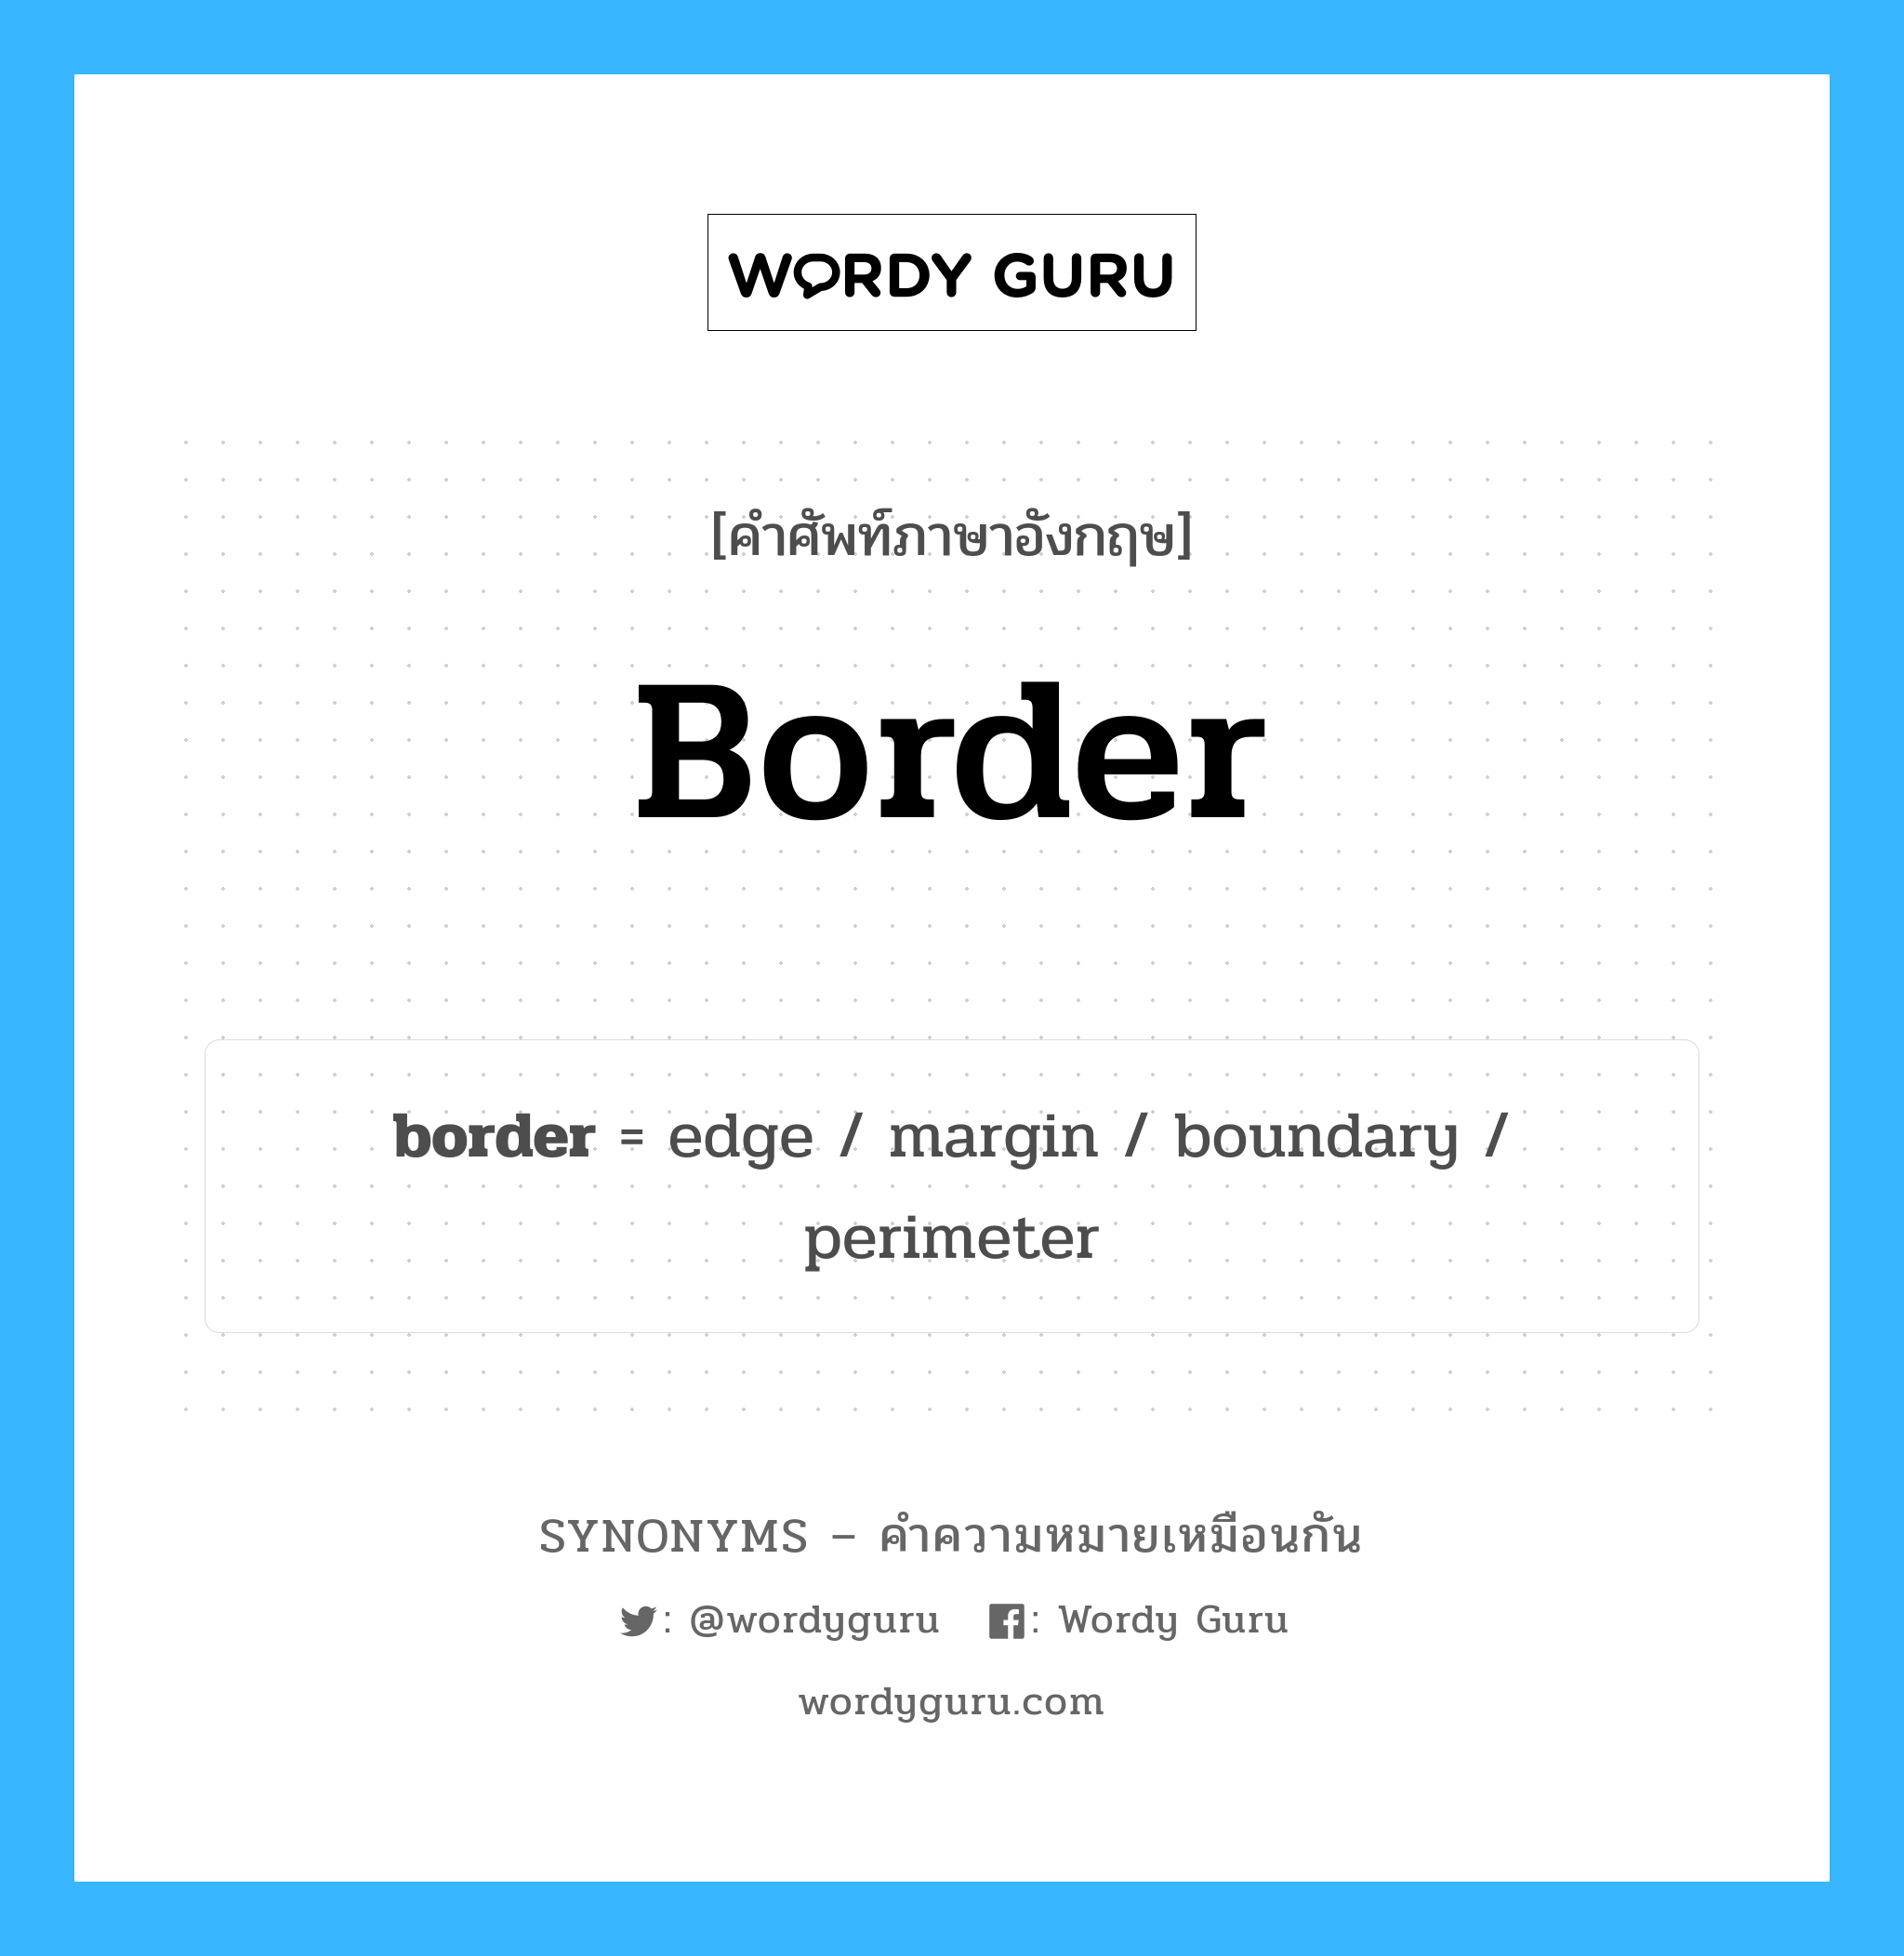 perimeter เป็นหนึ่งใน border และมีคำอื่น ๆ อีกดังนี้, คำศัพท์ภาษาอังกฤษ perimeter ความหมายคล้ายกันกับ border แปลว่า ในขอบเขต หมวด border